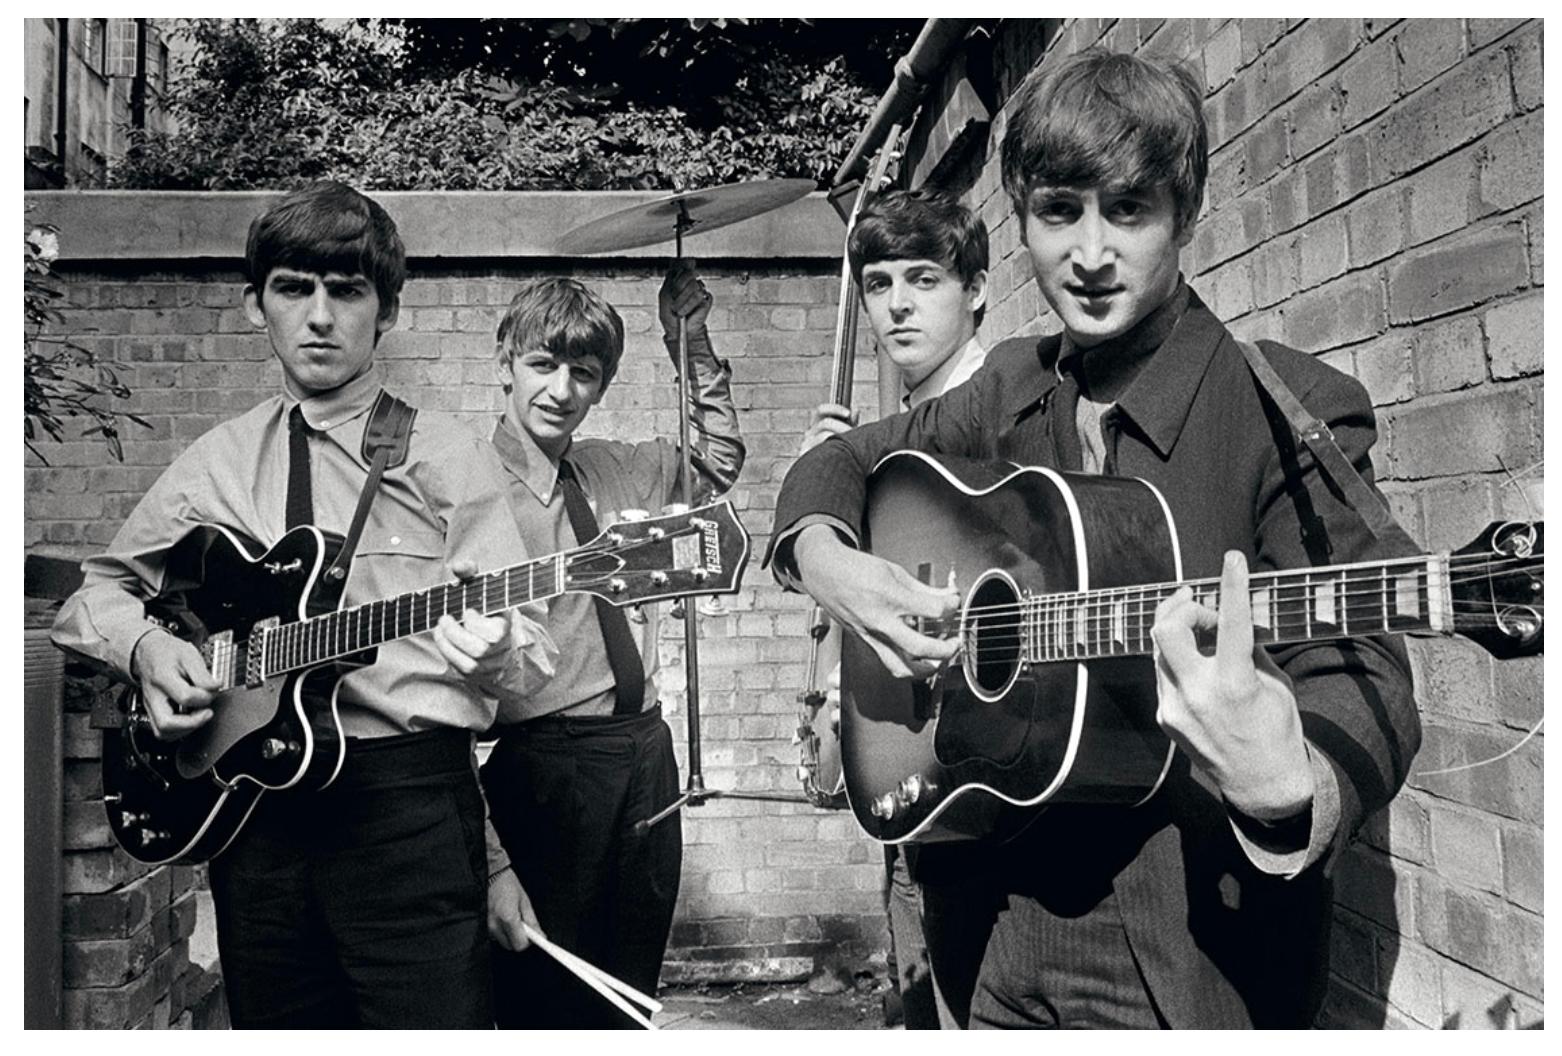 Terry O'Neill - Backyard Beatles - handsignierte, limitierte Oversize-Doppelreihige Auflage